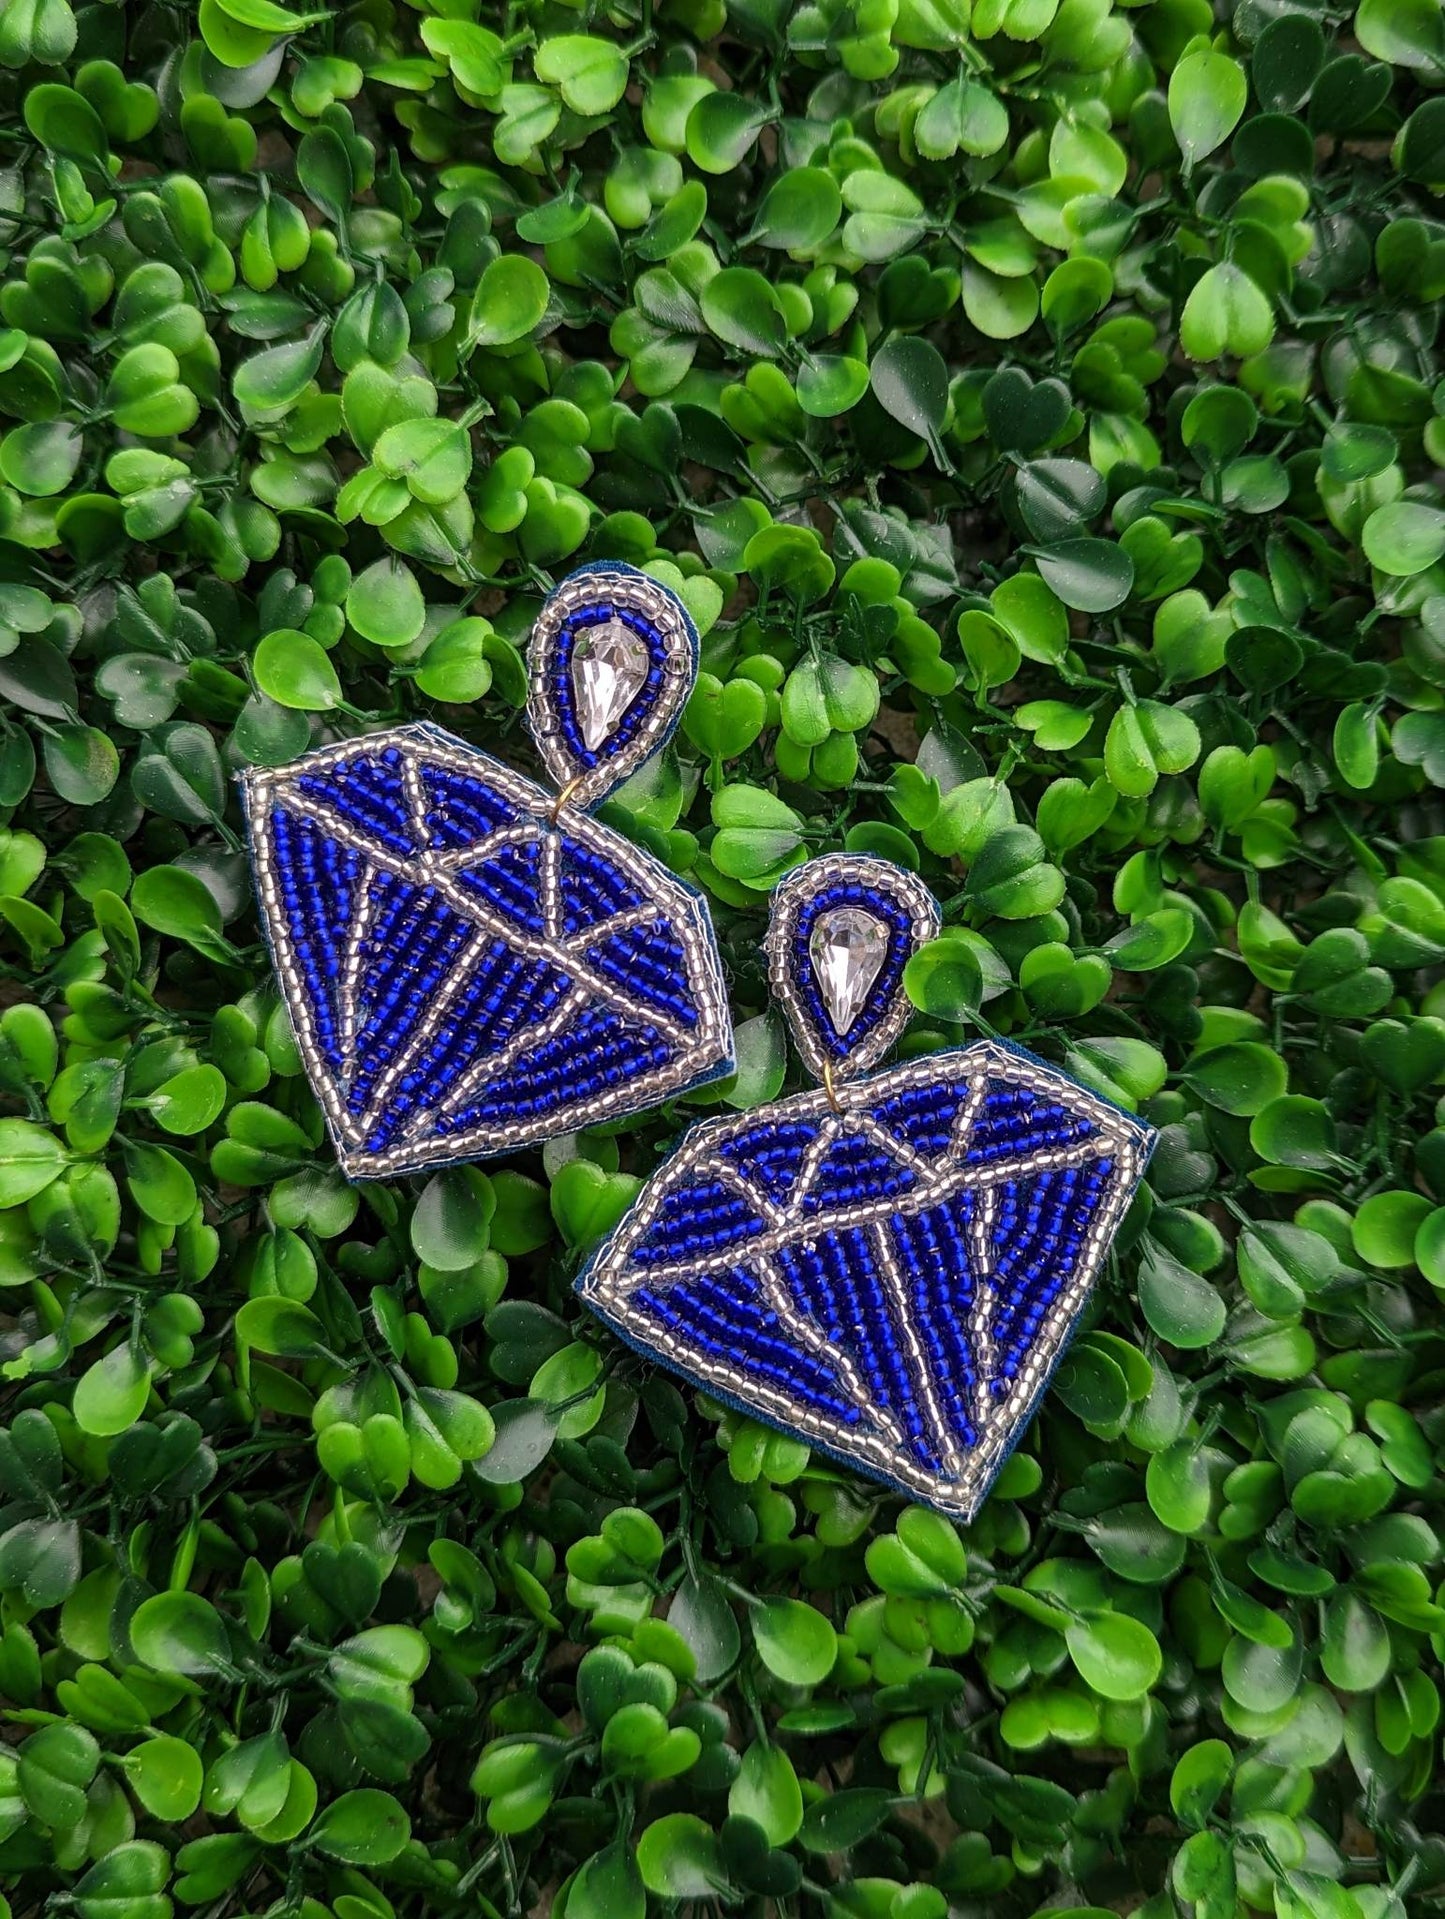 Sapphire | Custom Beaded Earrings